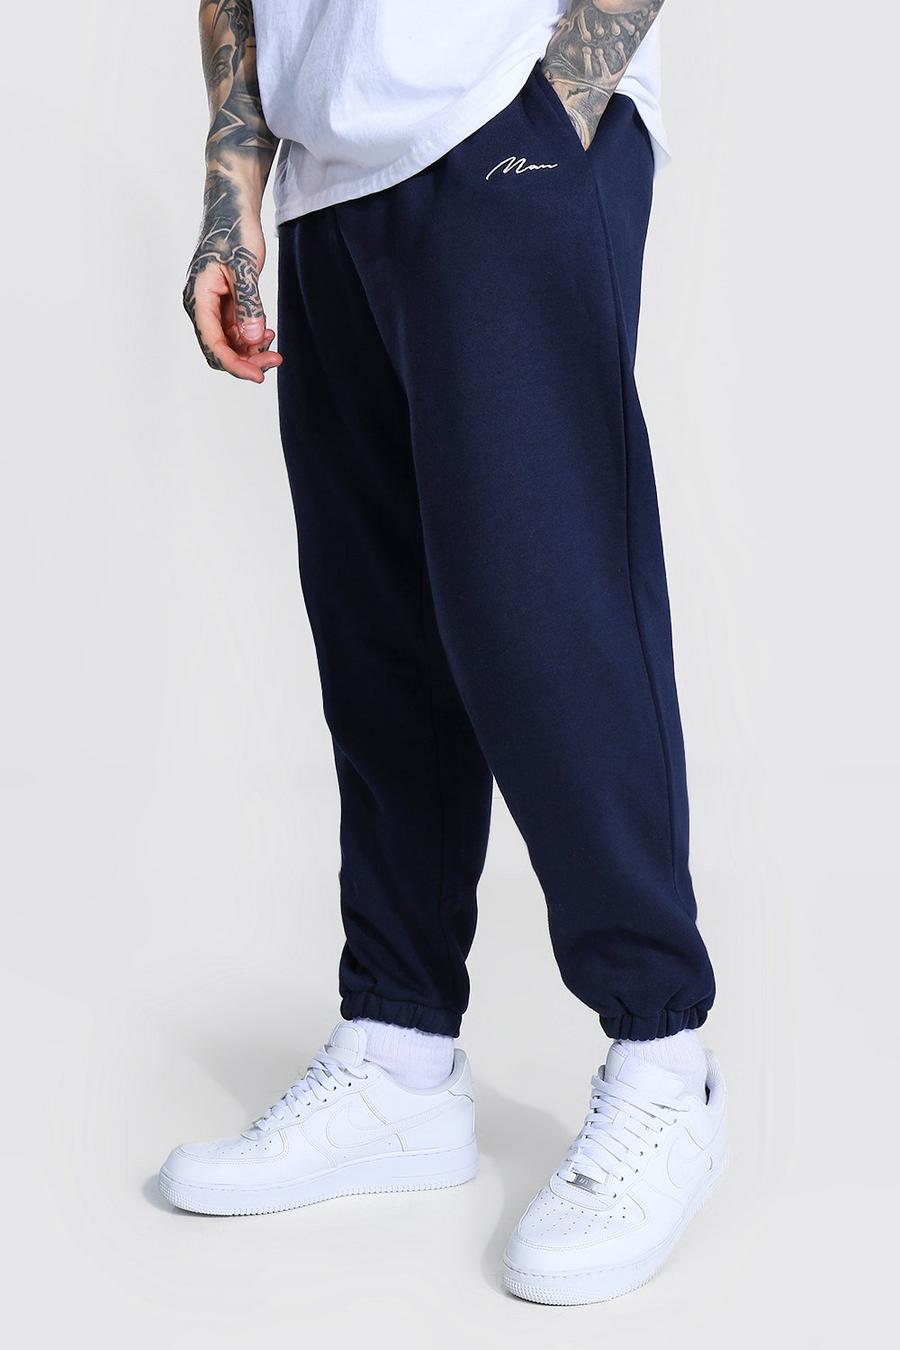 Pantalones de deporte holgados s de la firma Man, Azul marino image number 1